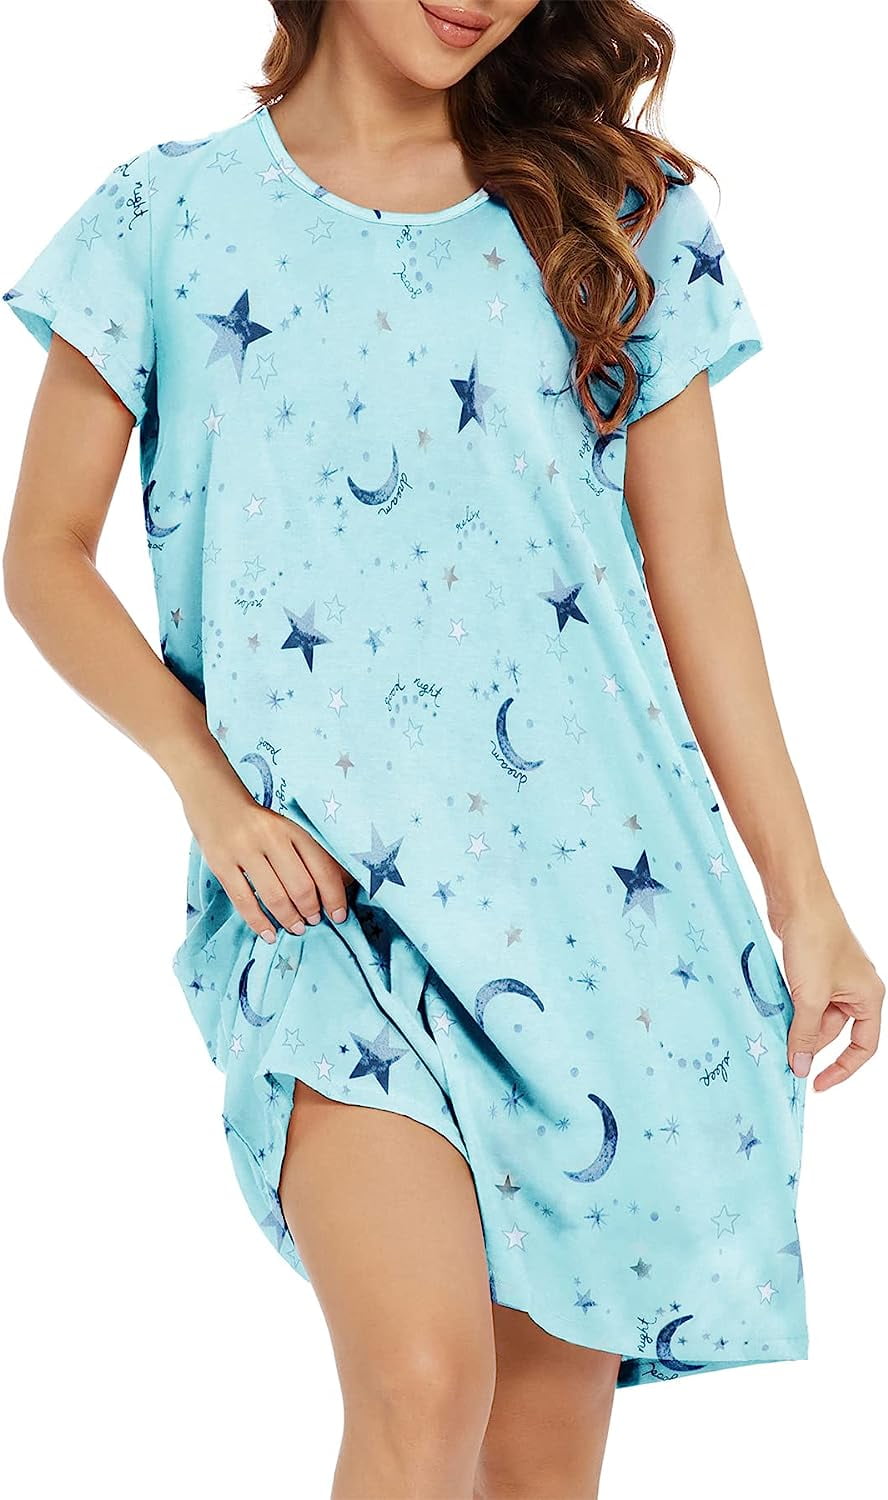 FOREEMME Womens Nightgowns Cotton Sleep Shirts Cartoon Printed Sleepwear  Short Sleeves Night Gown Dress Casual Pajamas L Cloud Moon 